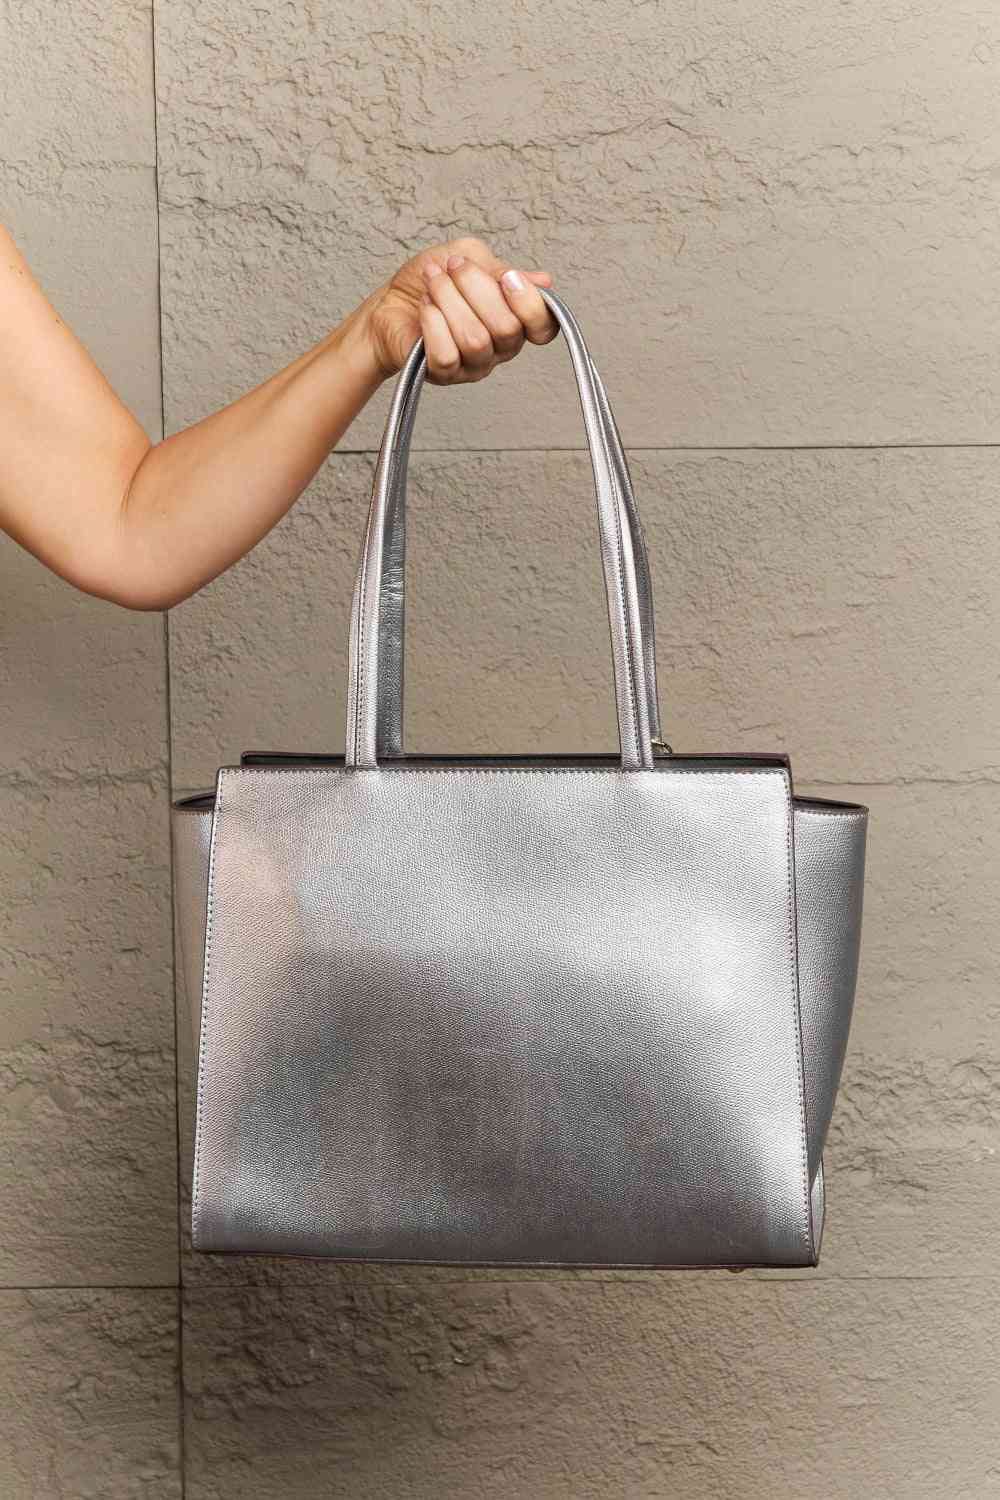 Nicole Lee USA Regina 3-Piece Satchel Bag Set - GemThreads Boutique